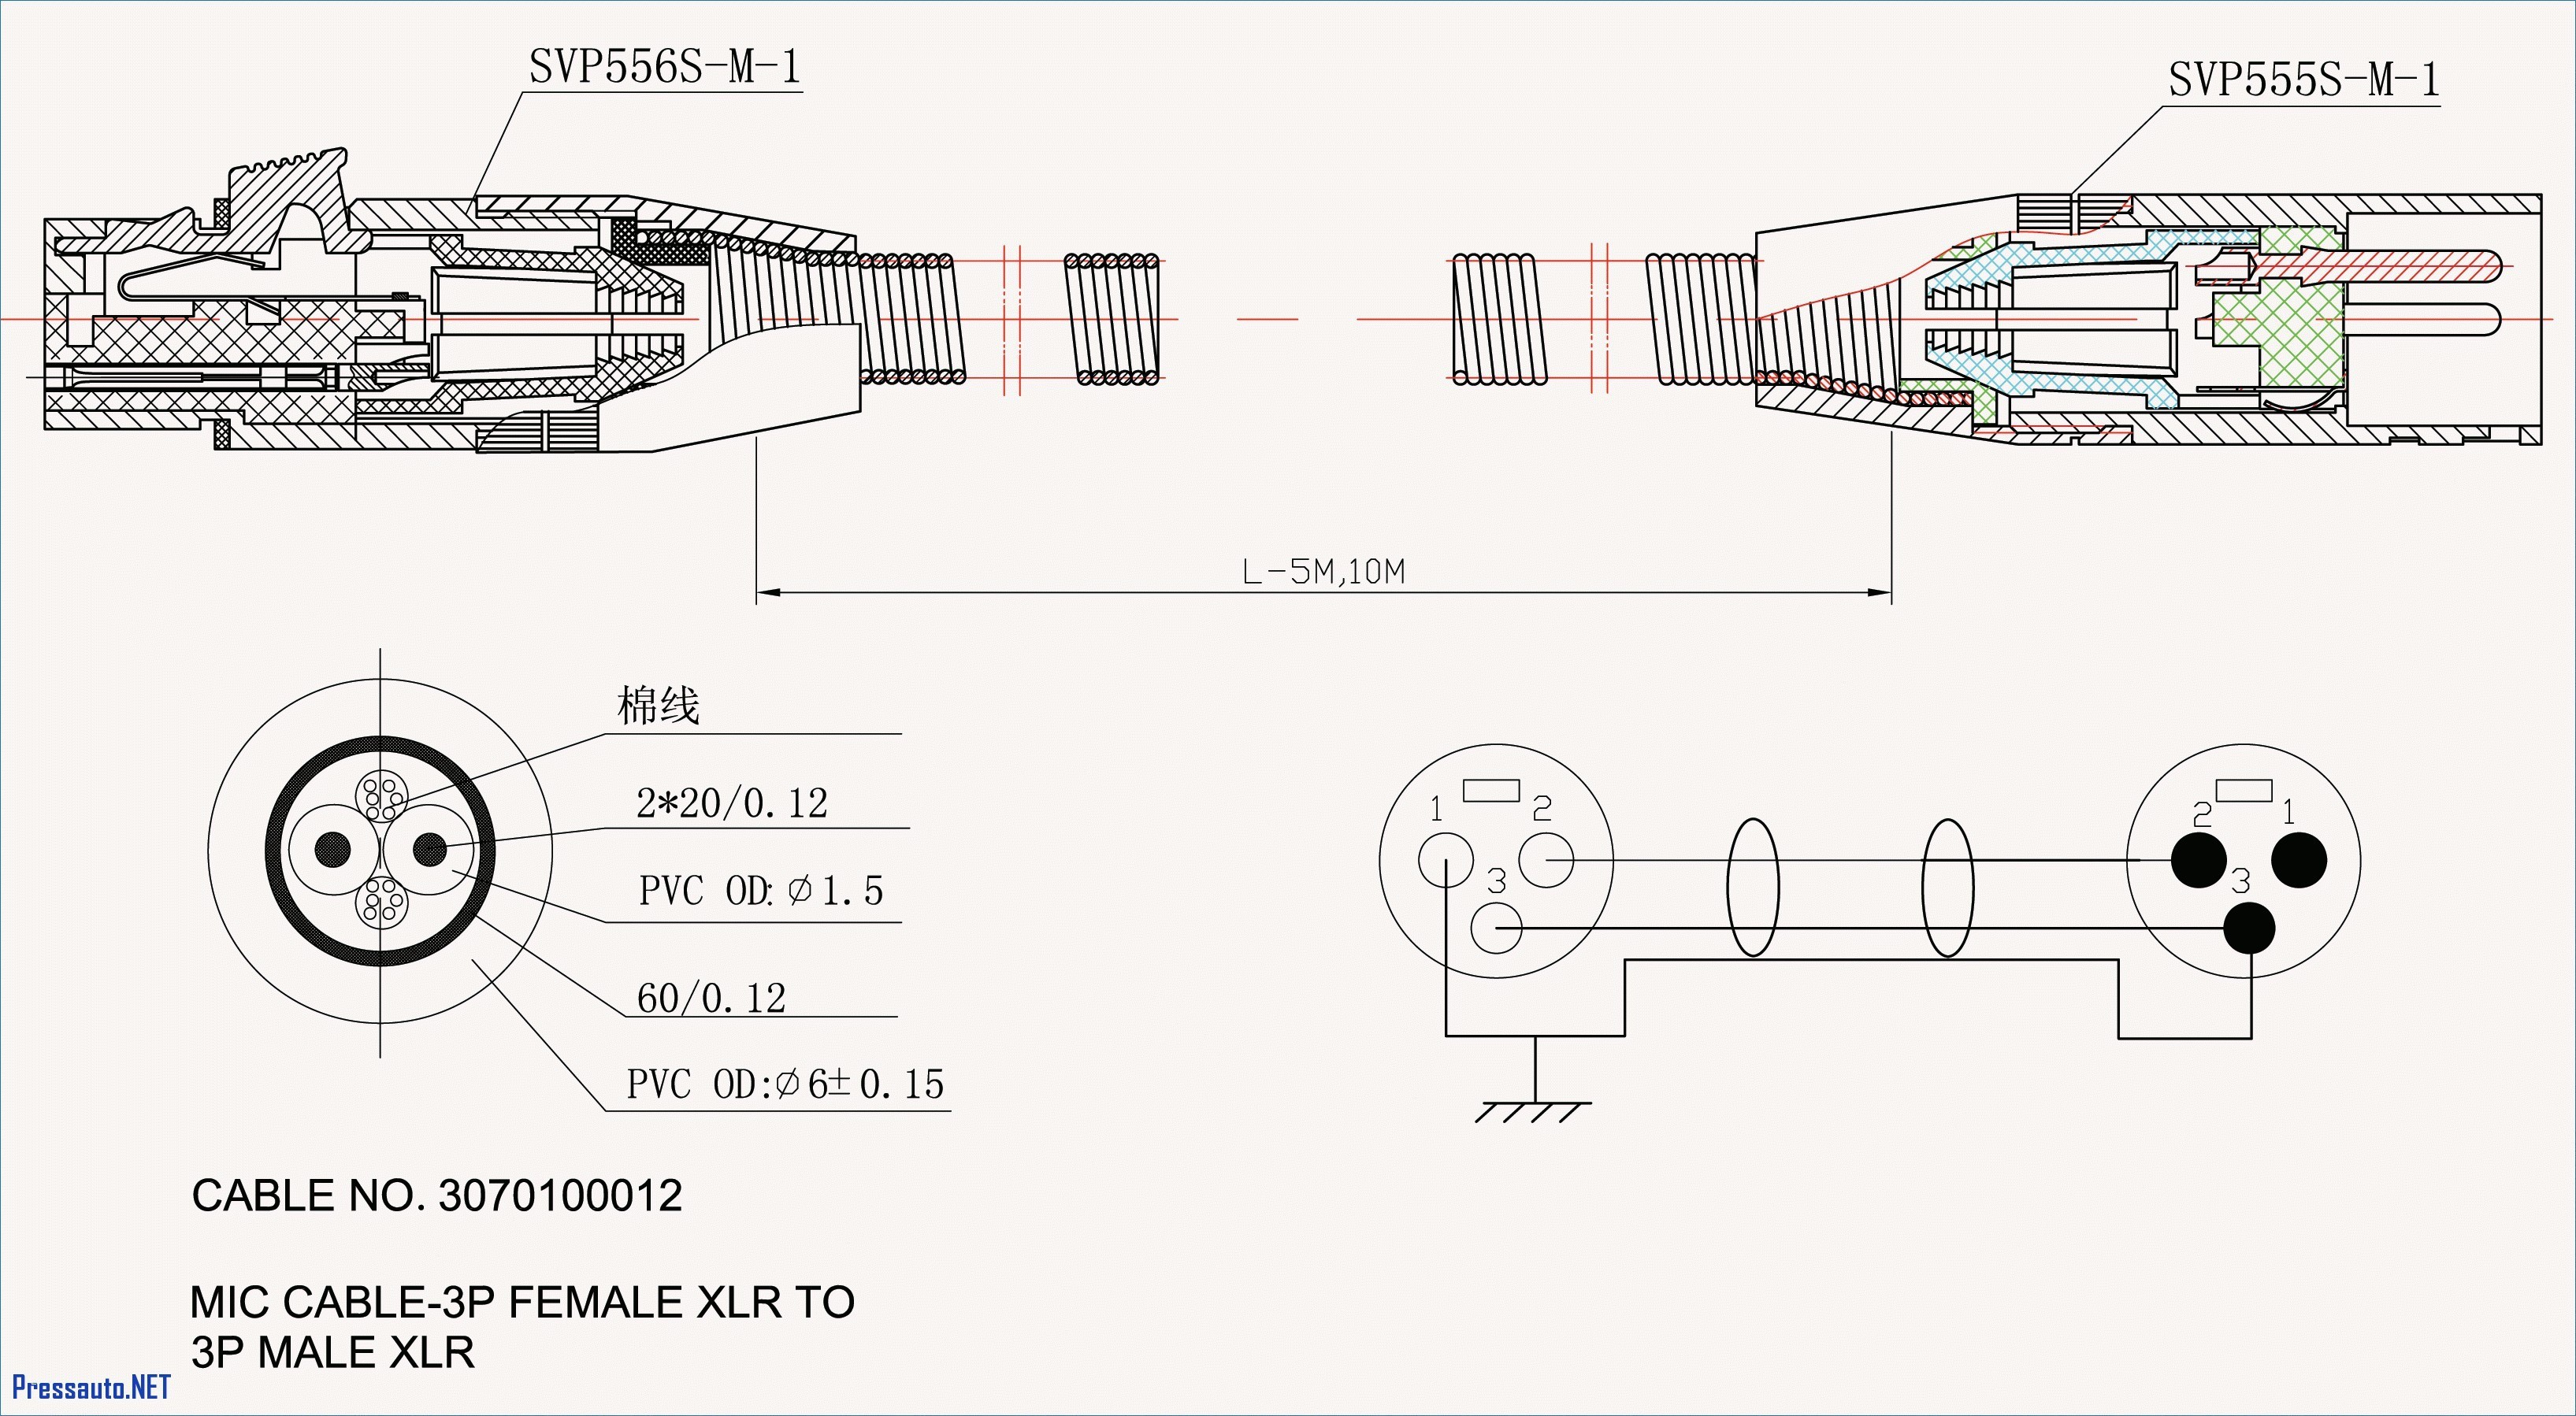 Ford Focus 1 6 Tdci Engine Diagram ford Explorer Relay Diagram – Simple Wiring Diagram Of Ford Focus 1 6 Tdci Engine Diagram